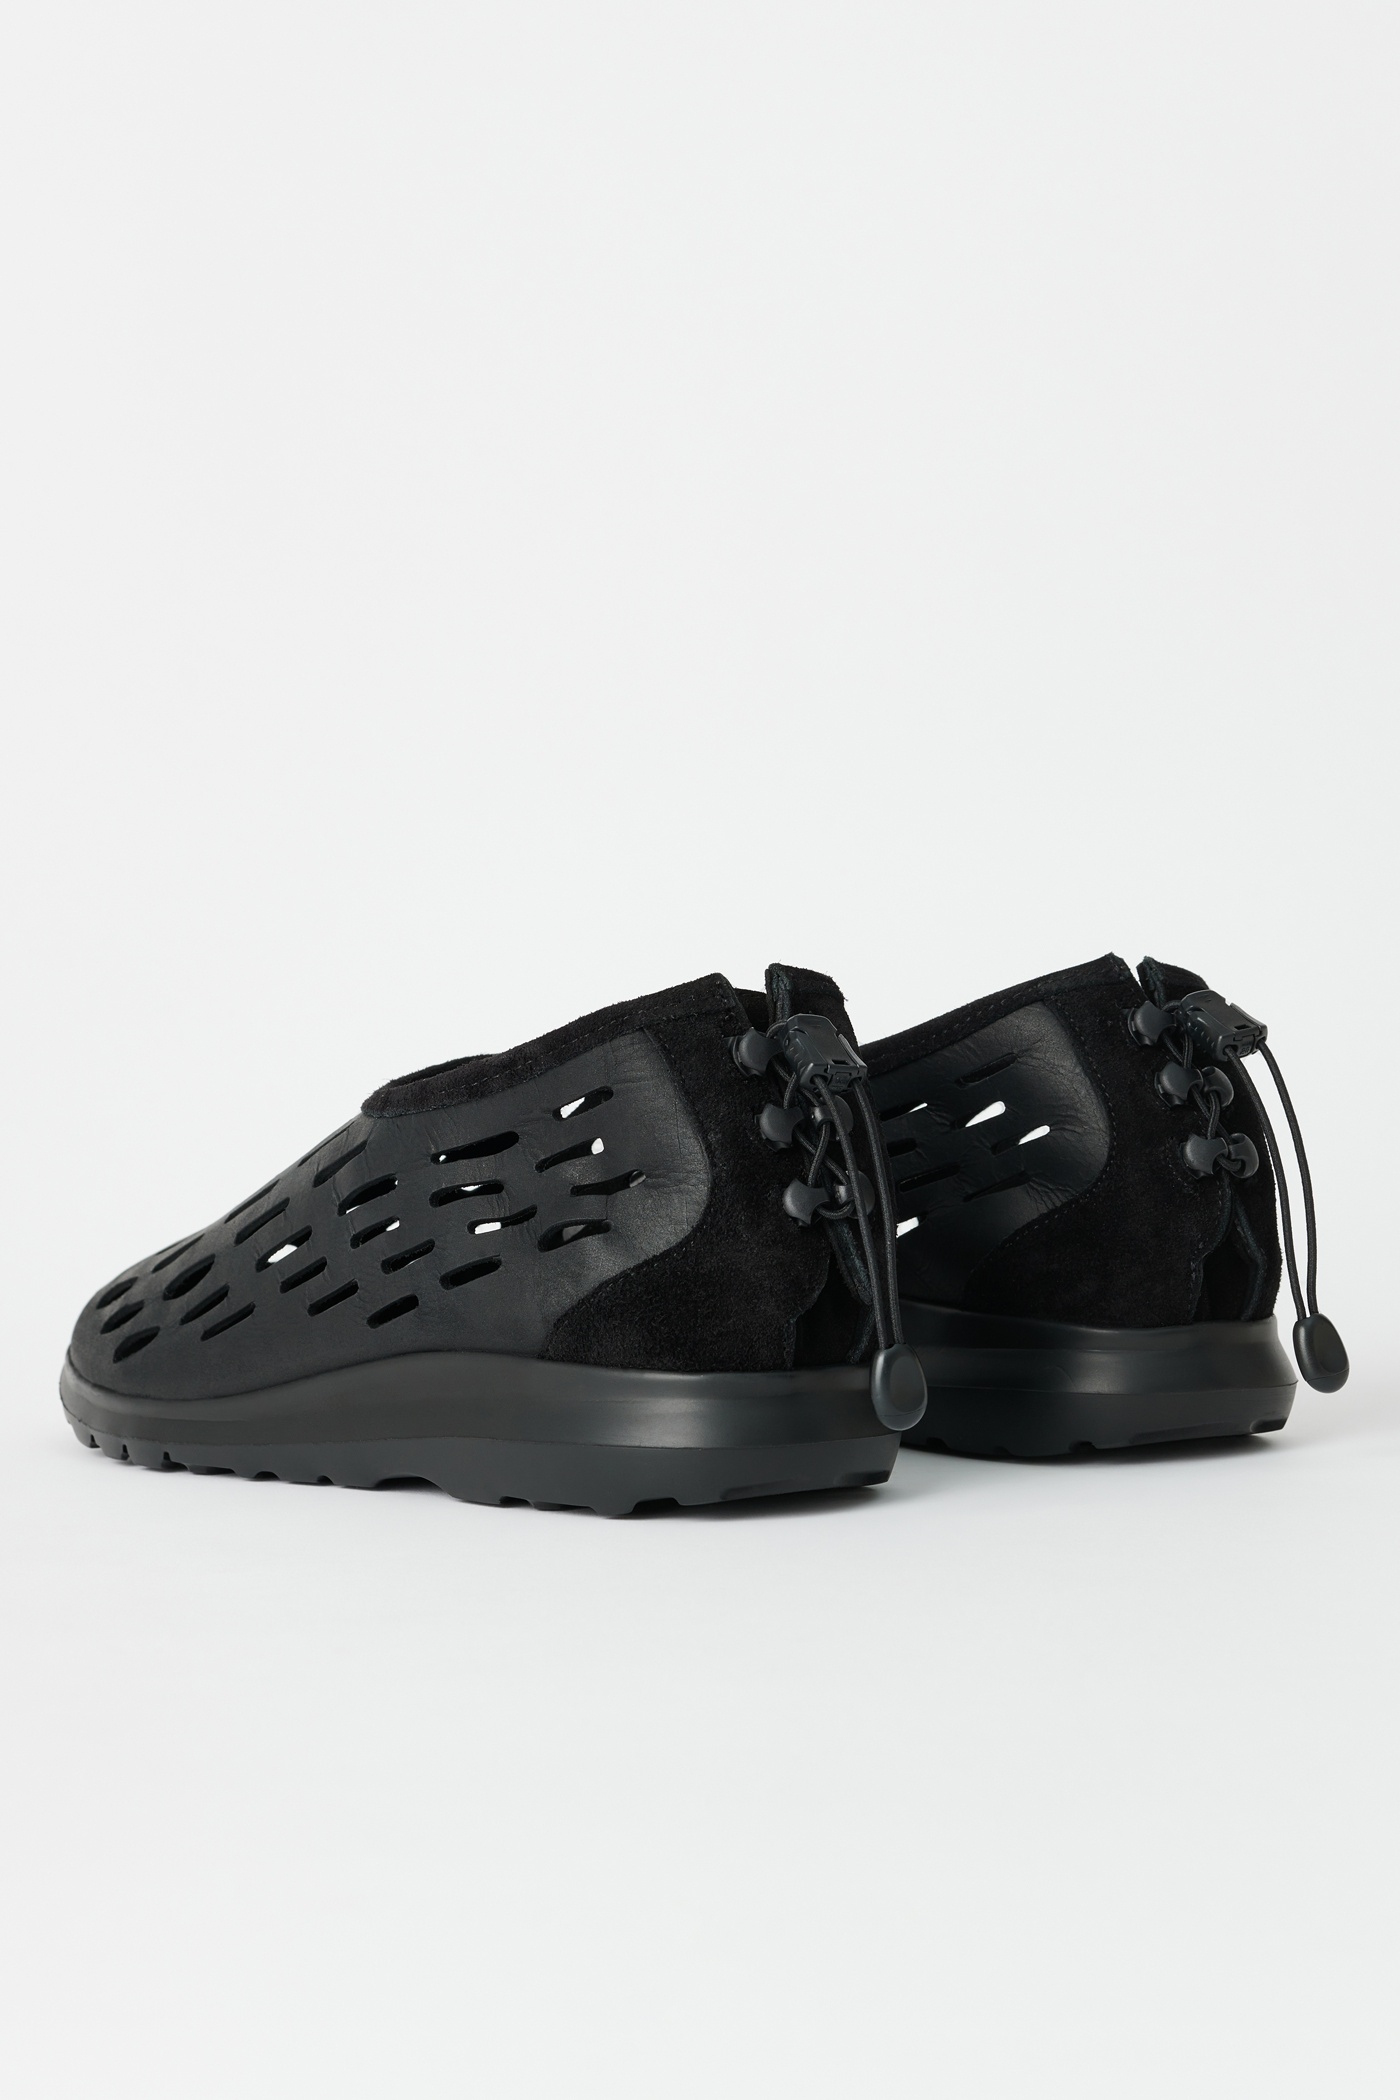 Strainer Black Leather - 6